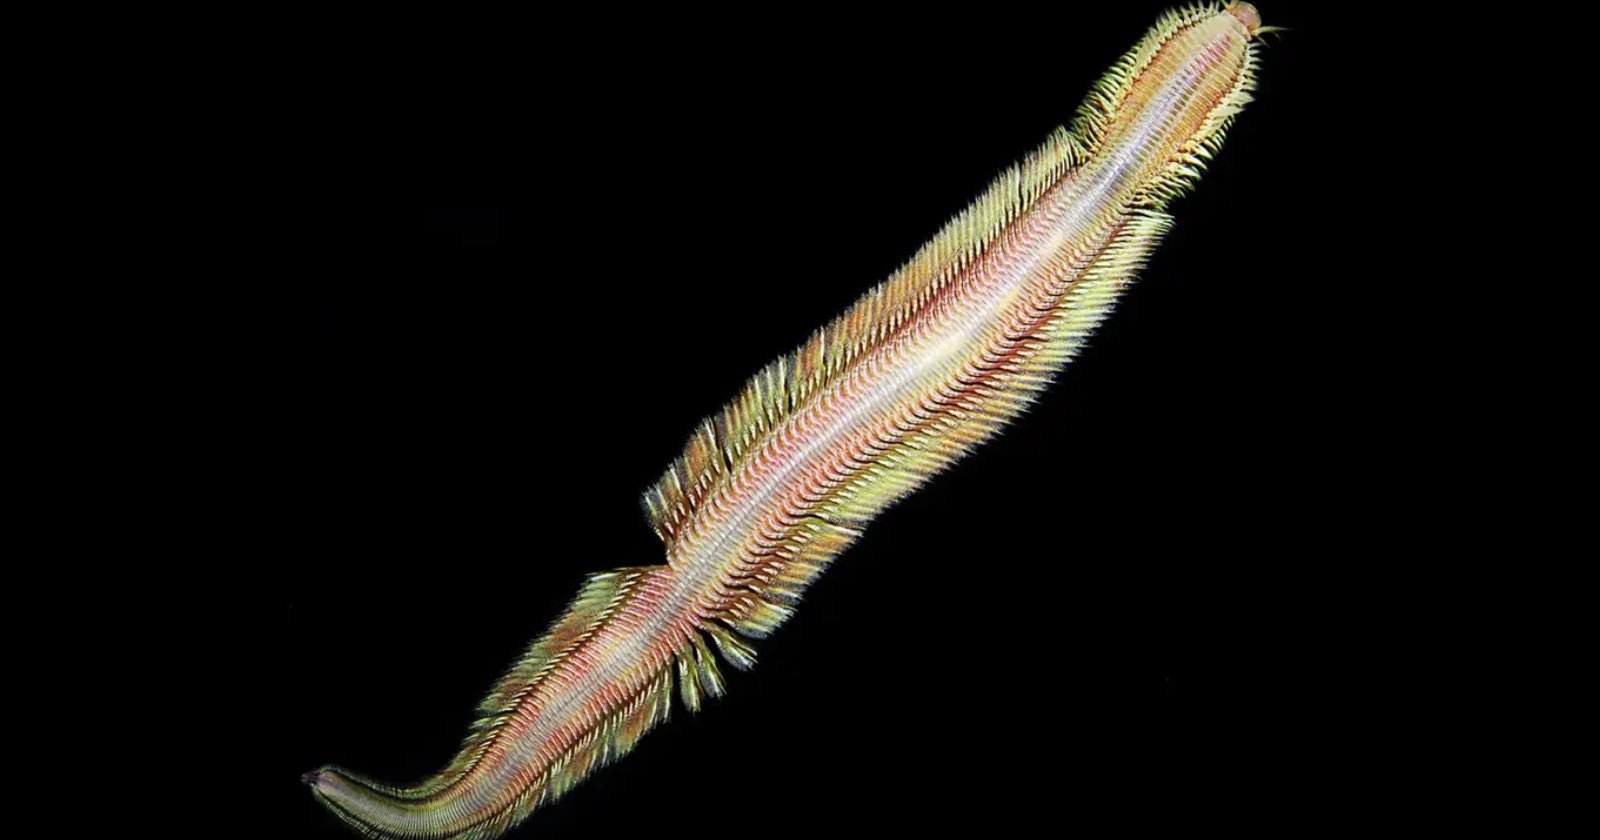  scientists photograph never-before-seen living magic carpet worm ocean 